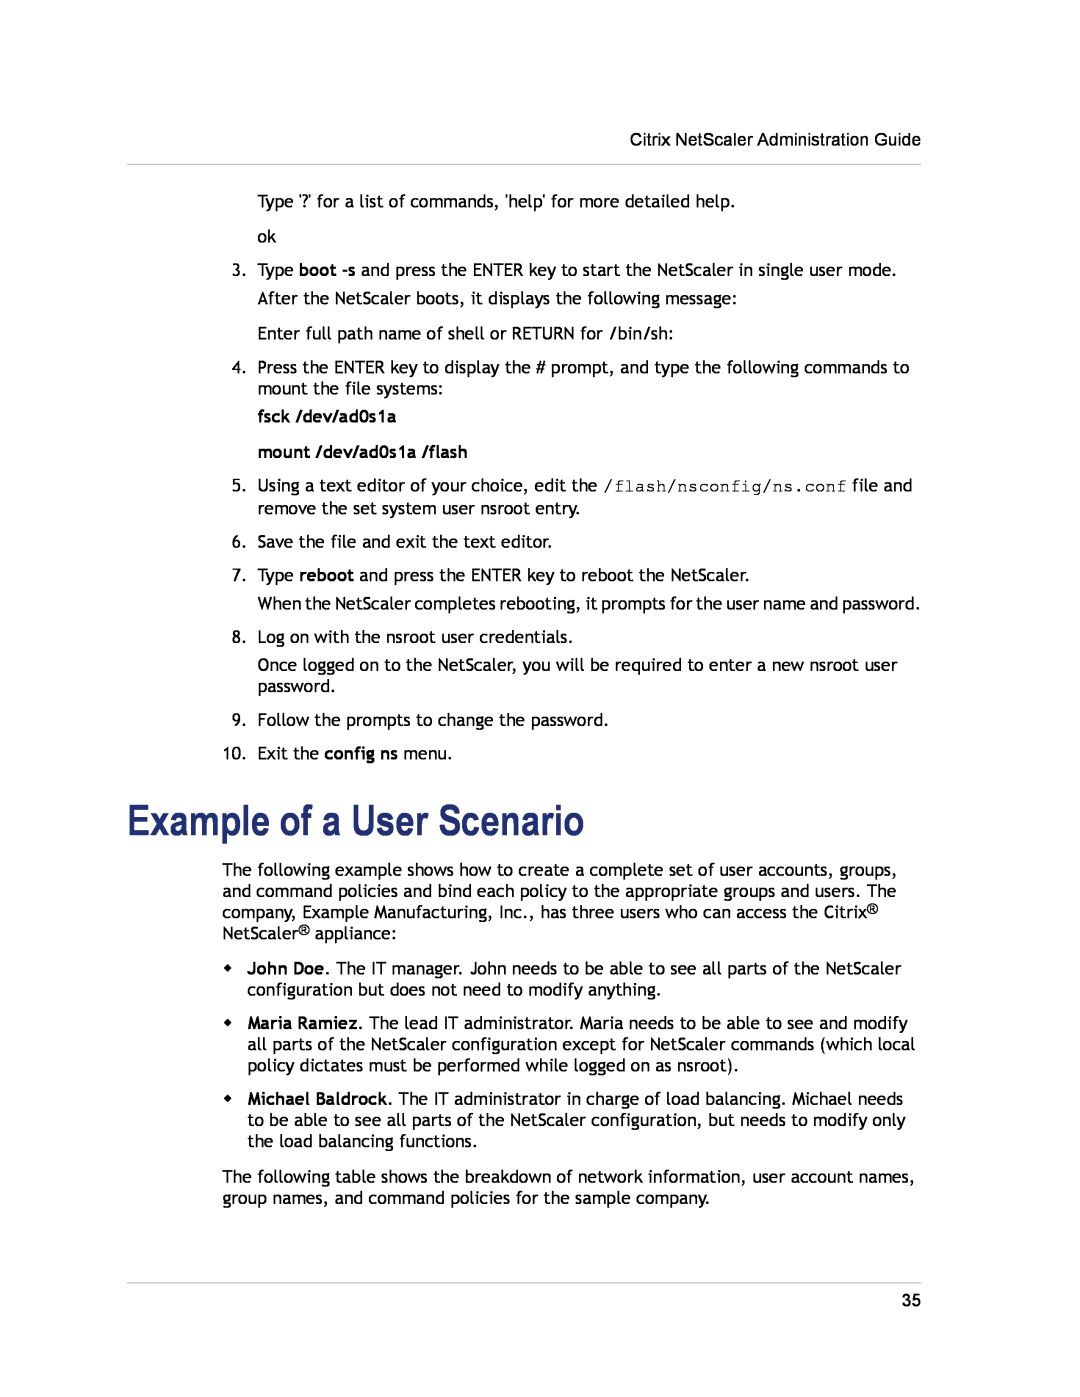 Citrix Systems CITRIX NETSCALER 9.3 manual Example of a User Scenario, fsck /dev/ad0s1a mount /dev/ad0s1a /flash 